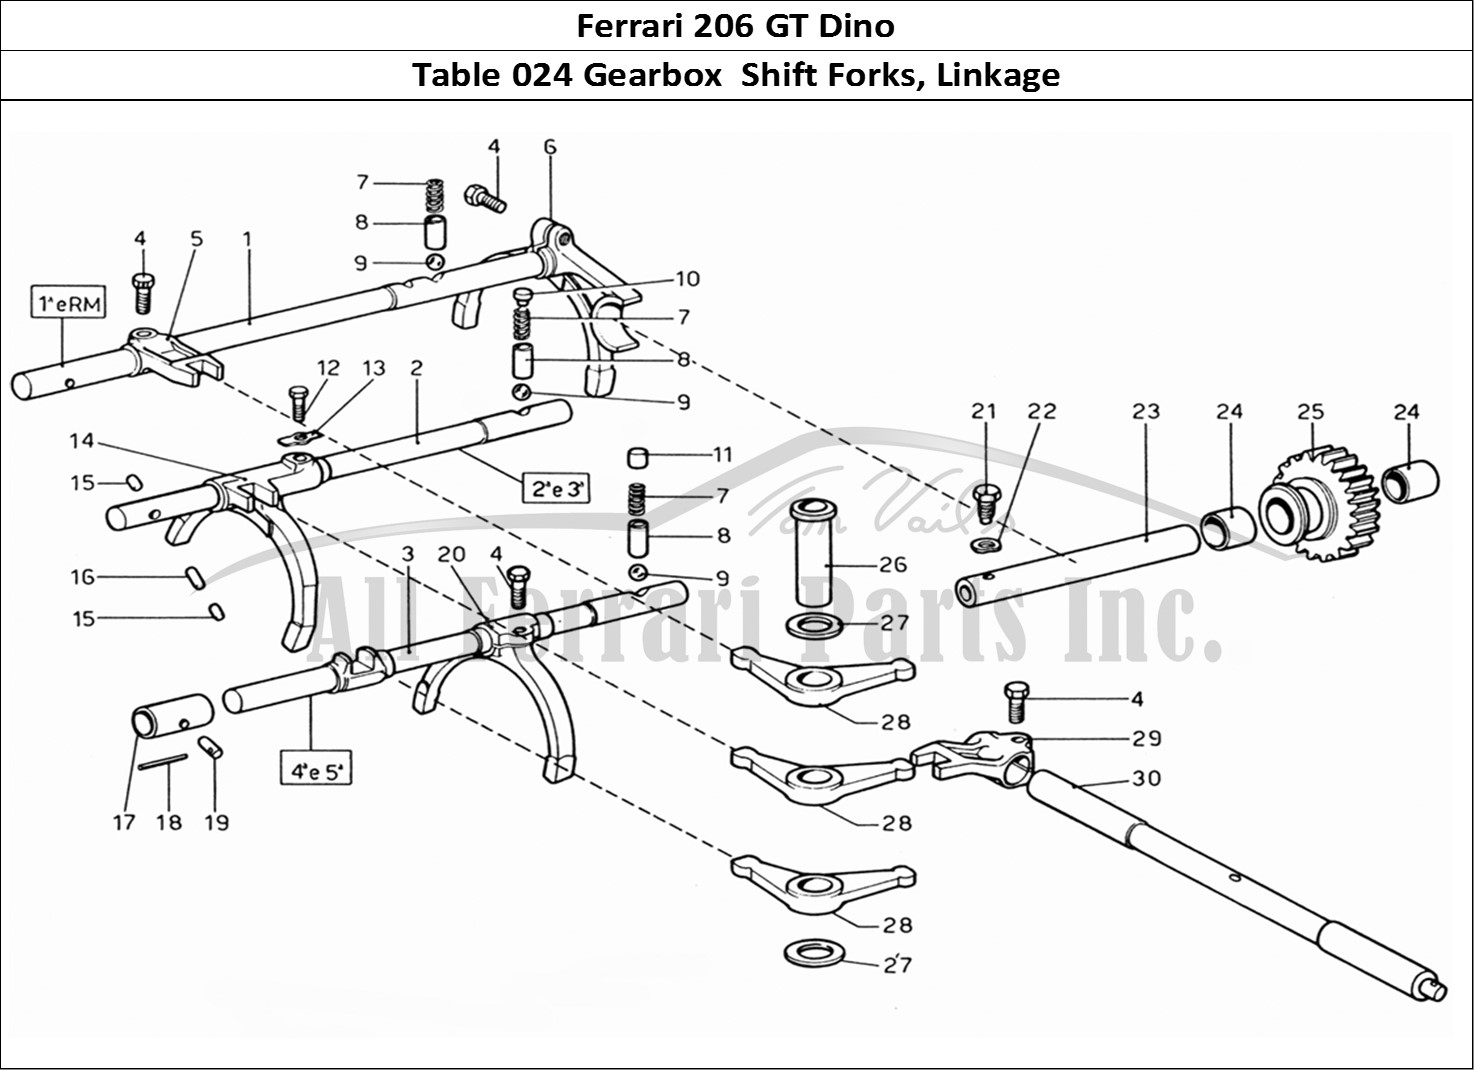 Ferrari Parts Ferrari 206 GT Dino (1969) Page 024 Inside Gear Box Controls